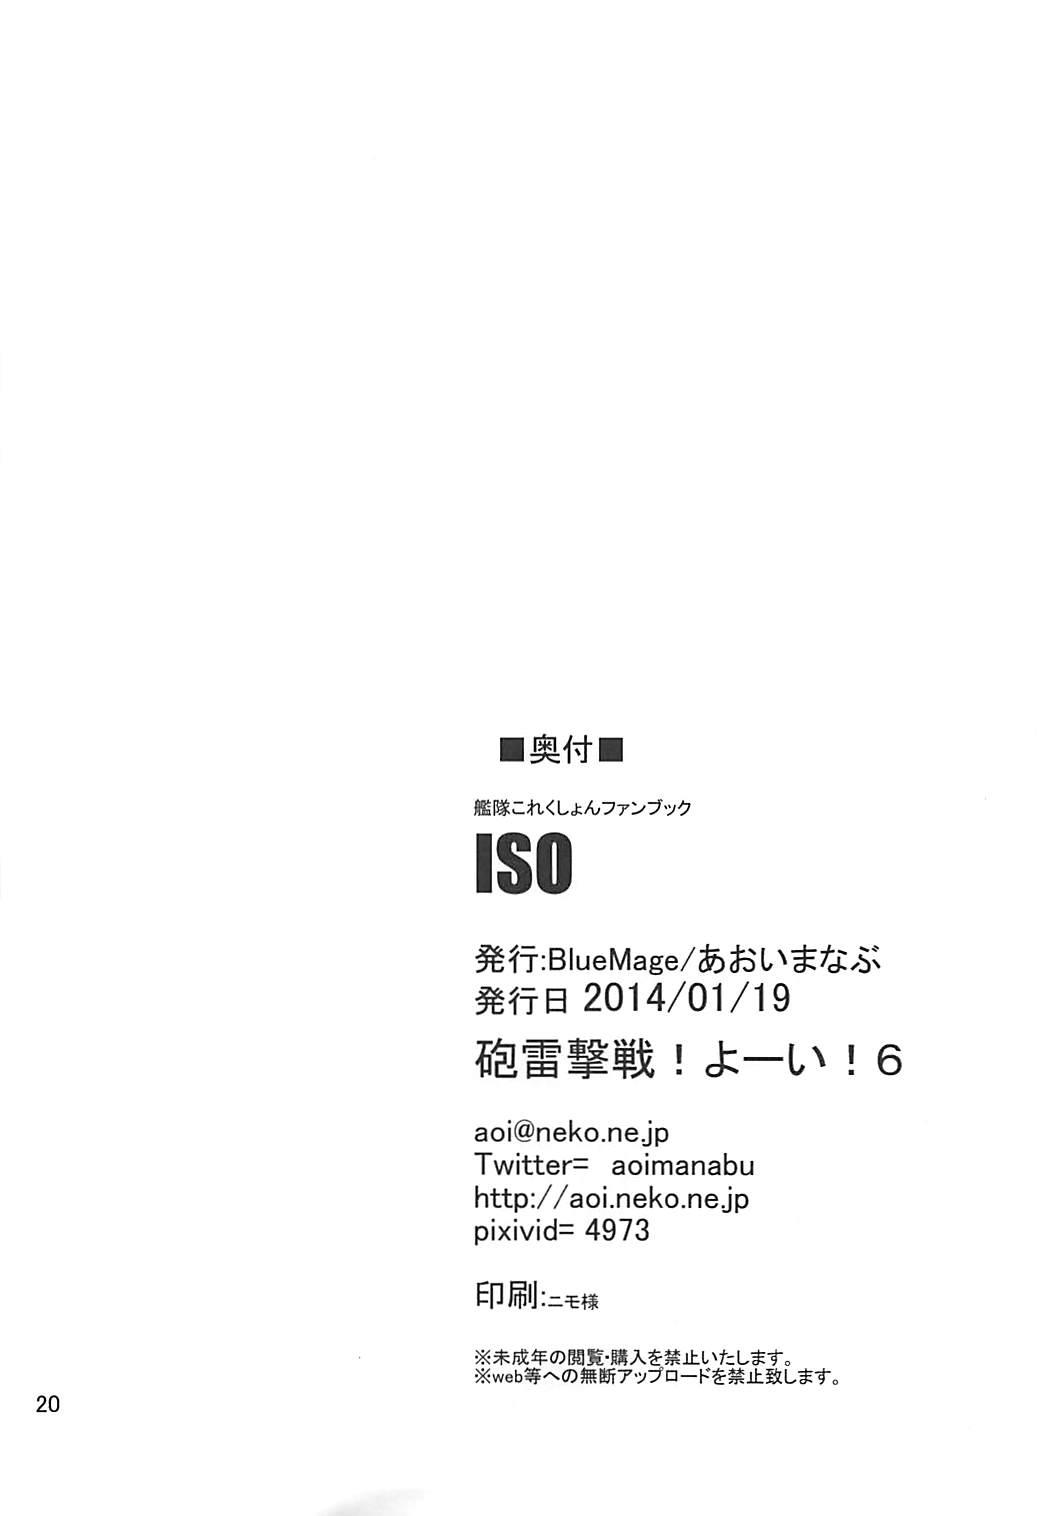 ISO - Ironbottom Sound Oppai 20